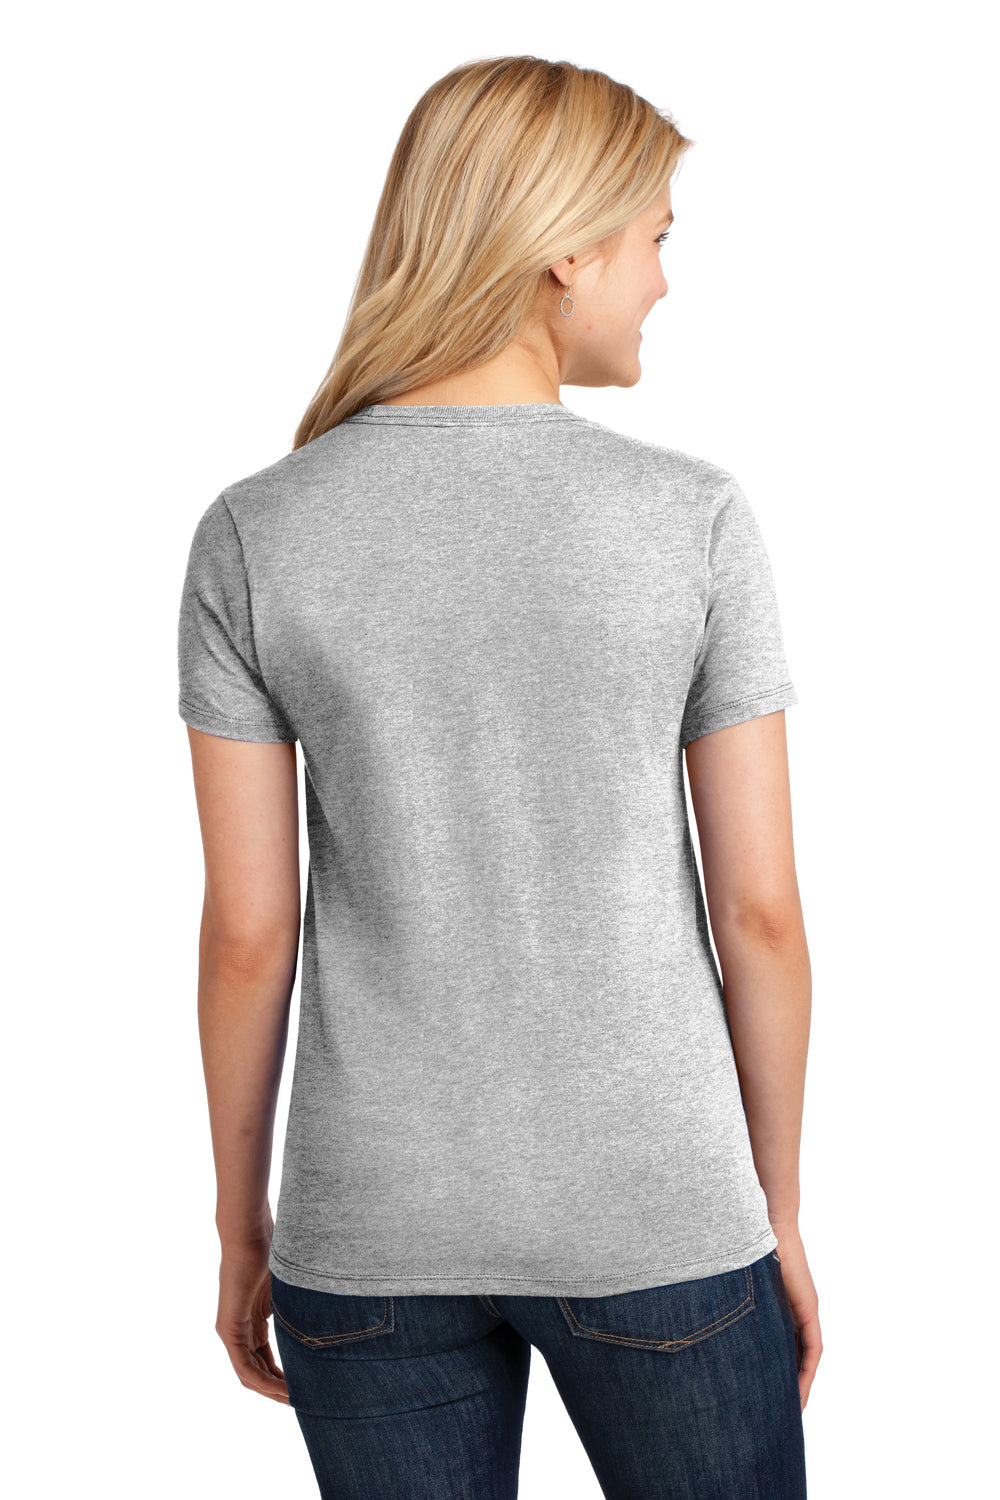 Port & Company LPC54 Womens Core Short Sleeve Crewneck T-Shirt Ash Grey Back